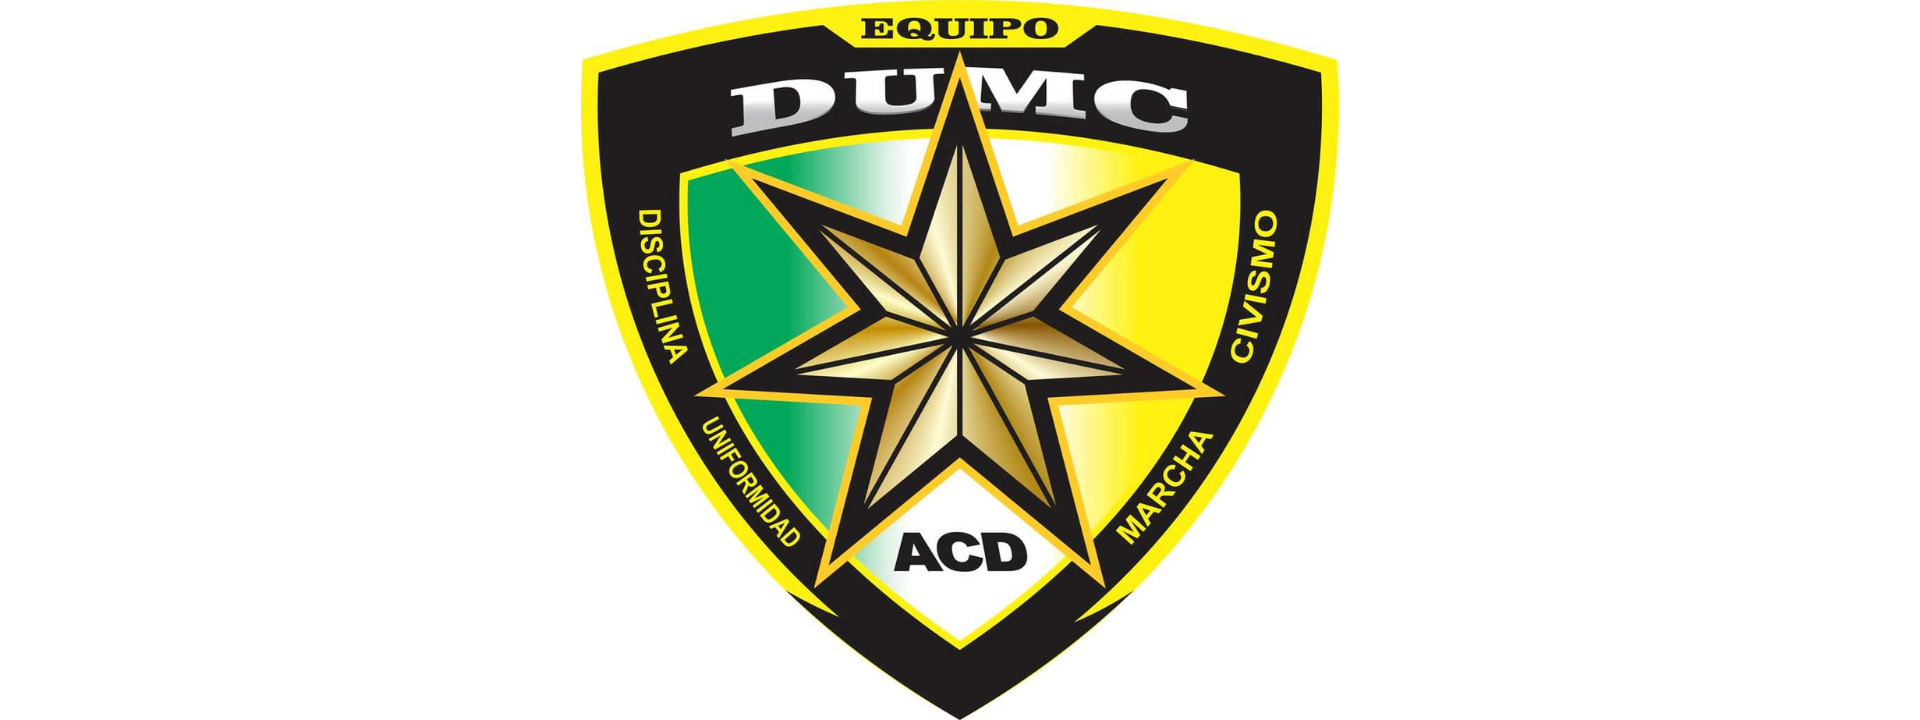 DUMC-ACD-adventista-jóvenes